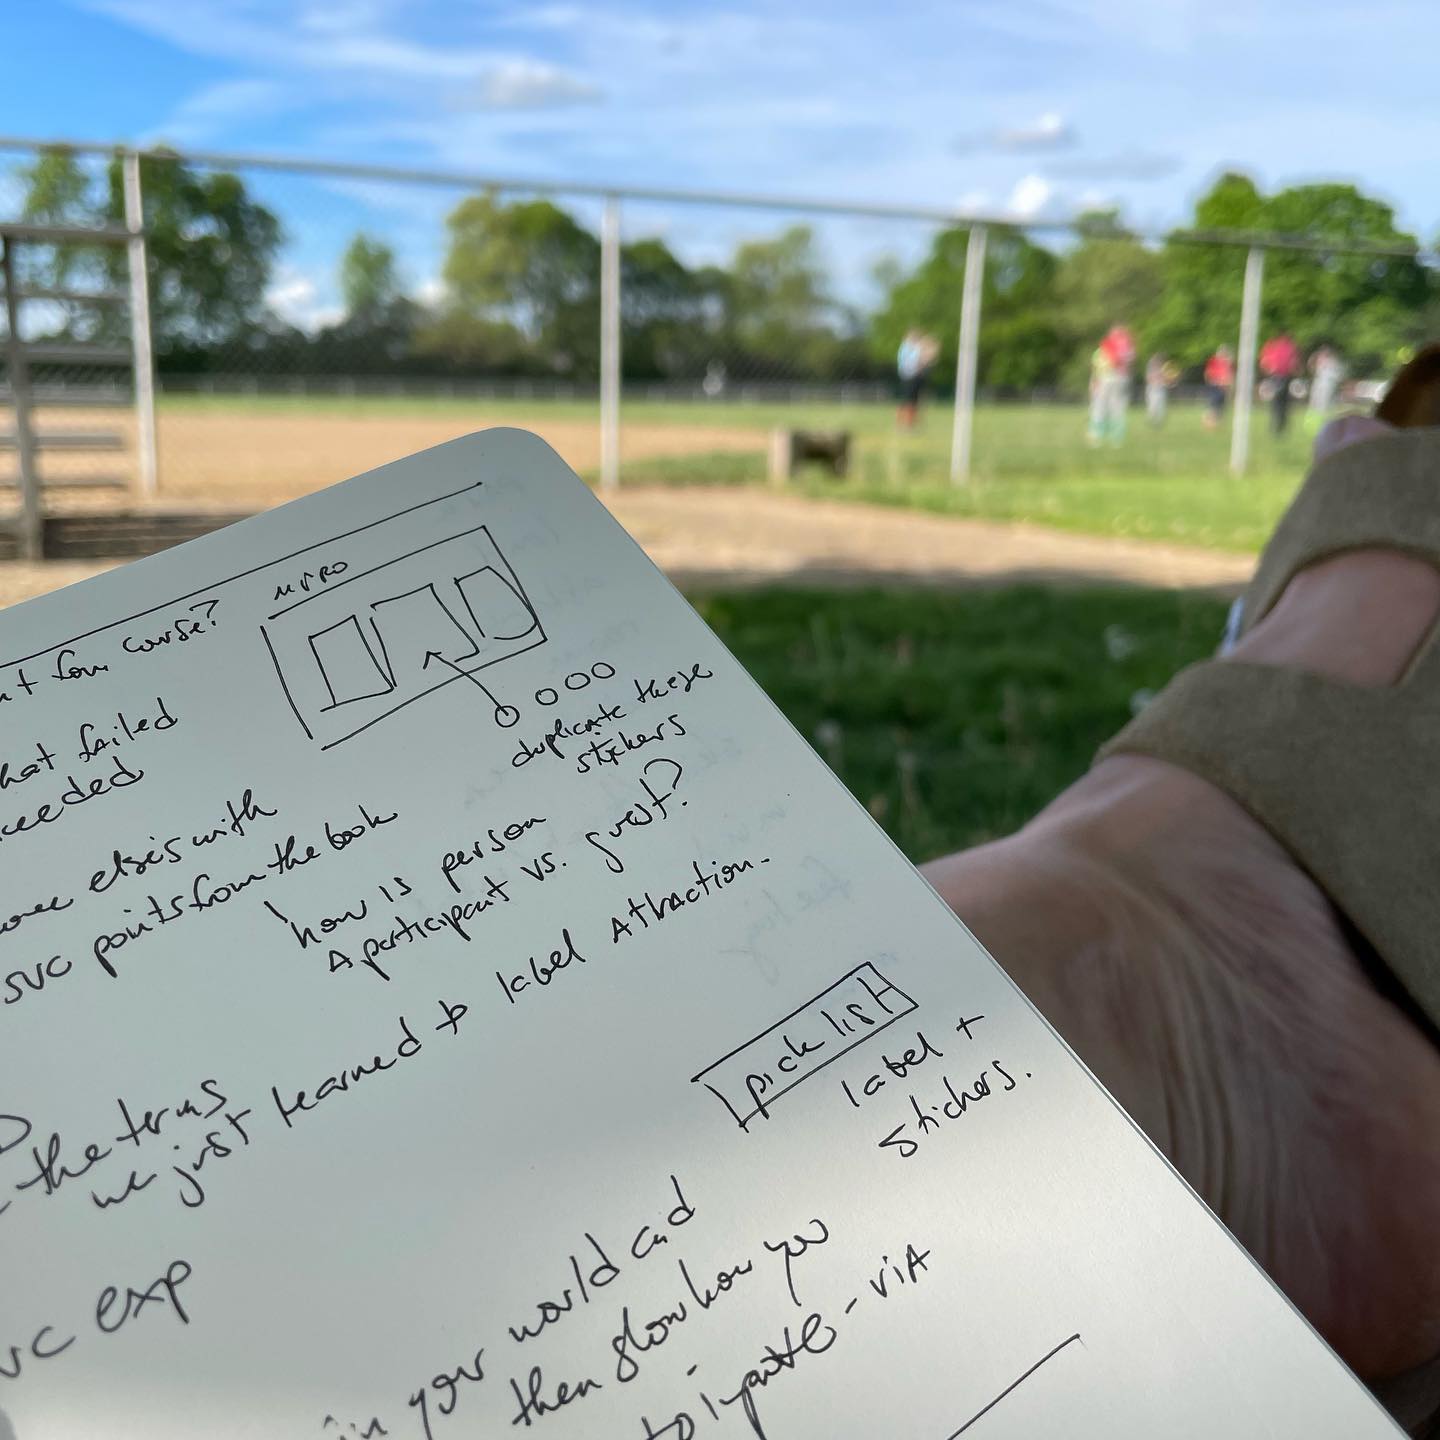 Birks. Course planning. Softball. Summer.